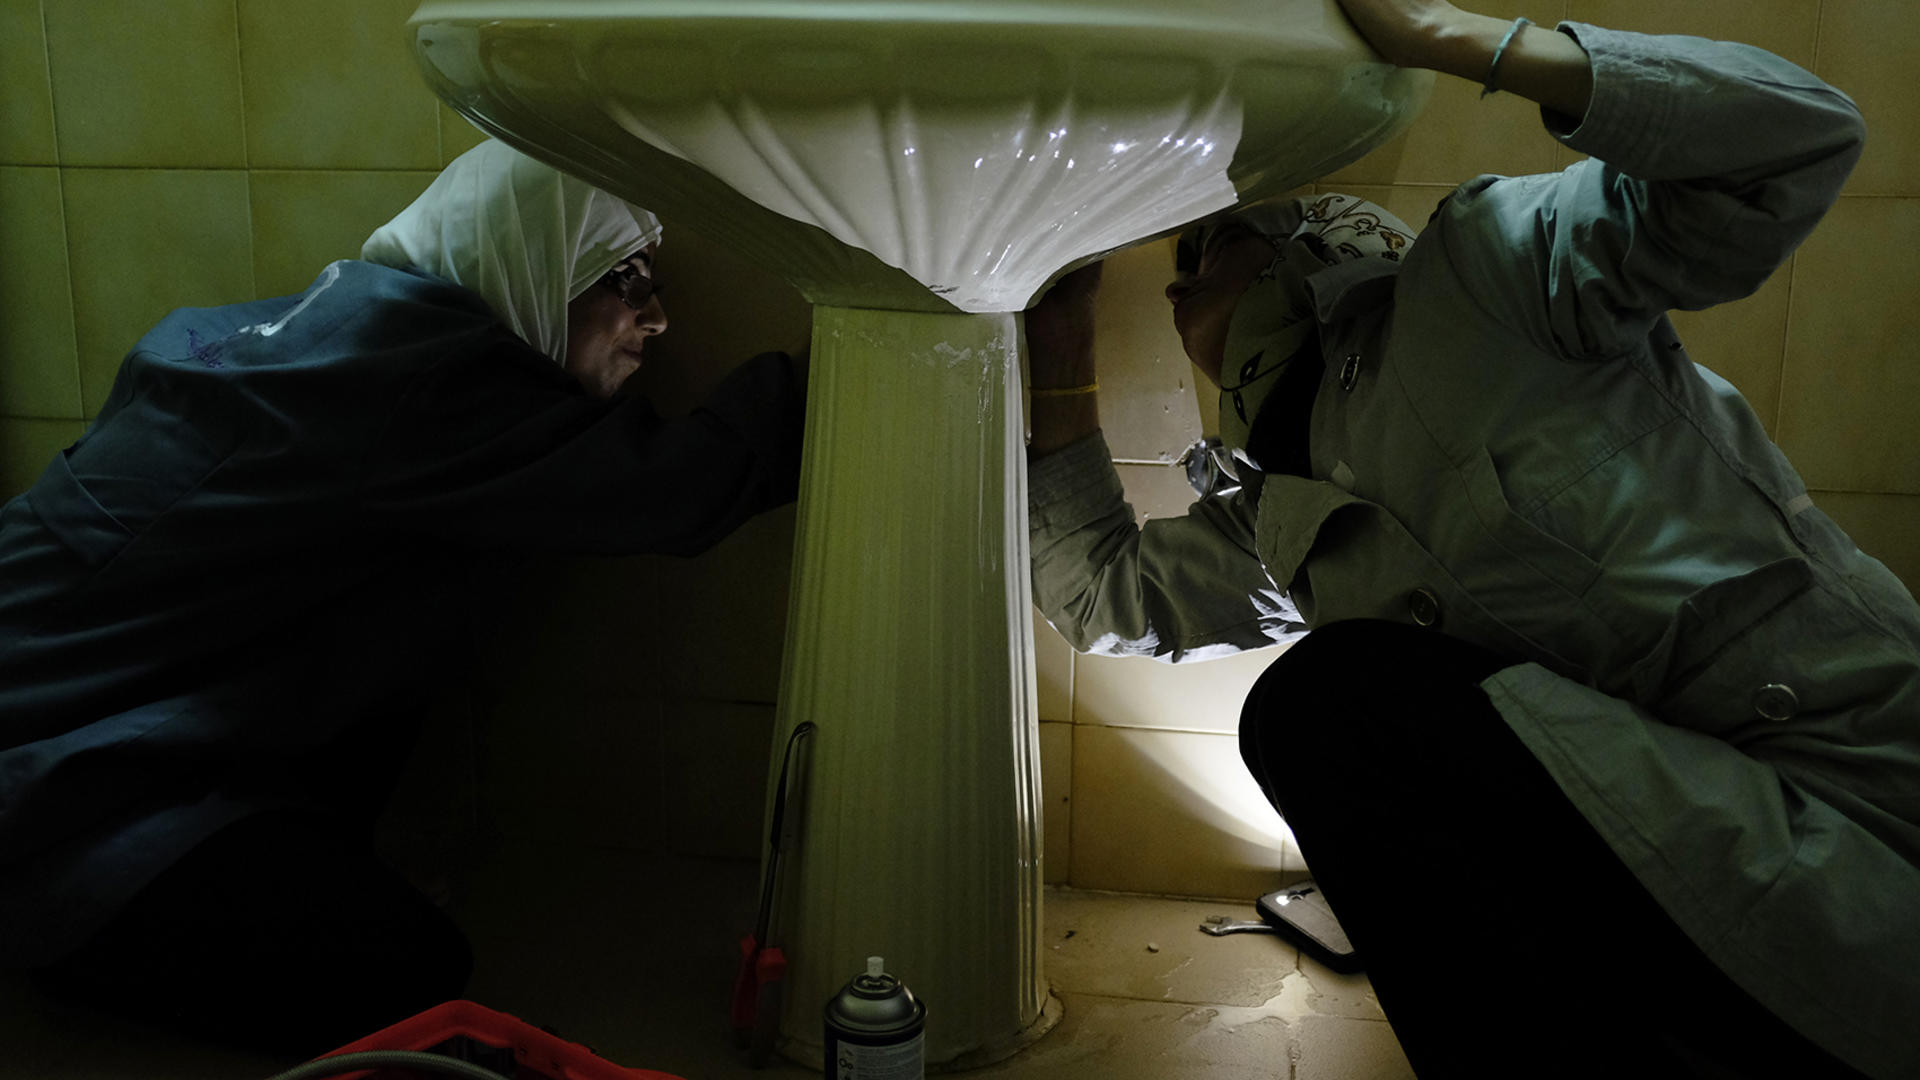 Two Syrian women plumbers in Jordan